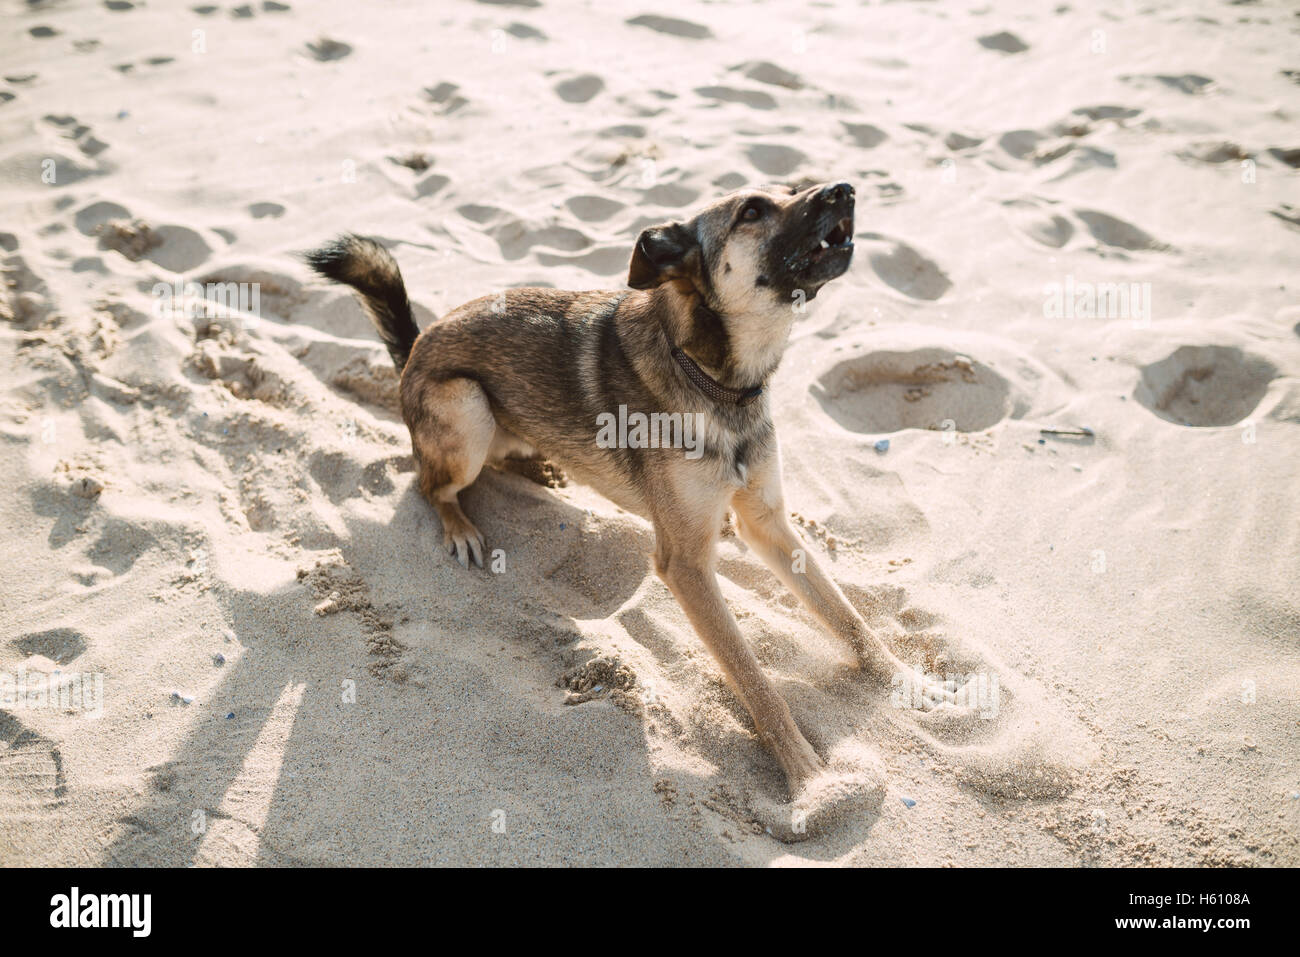 German shepherd dog playing on the beach. Dog is barking. Stock Photo